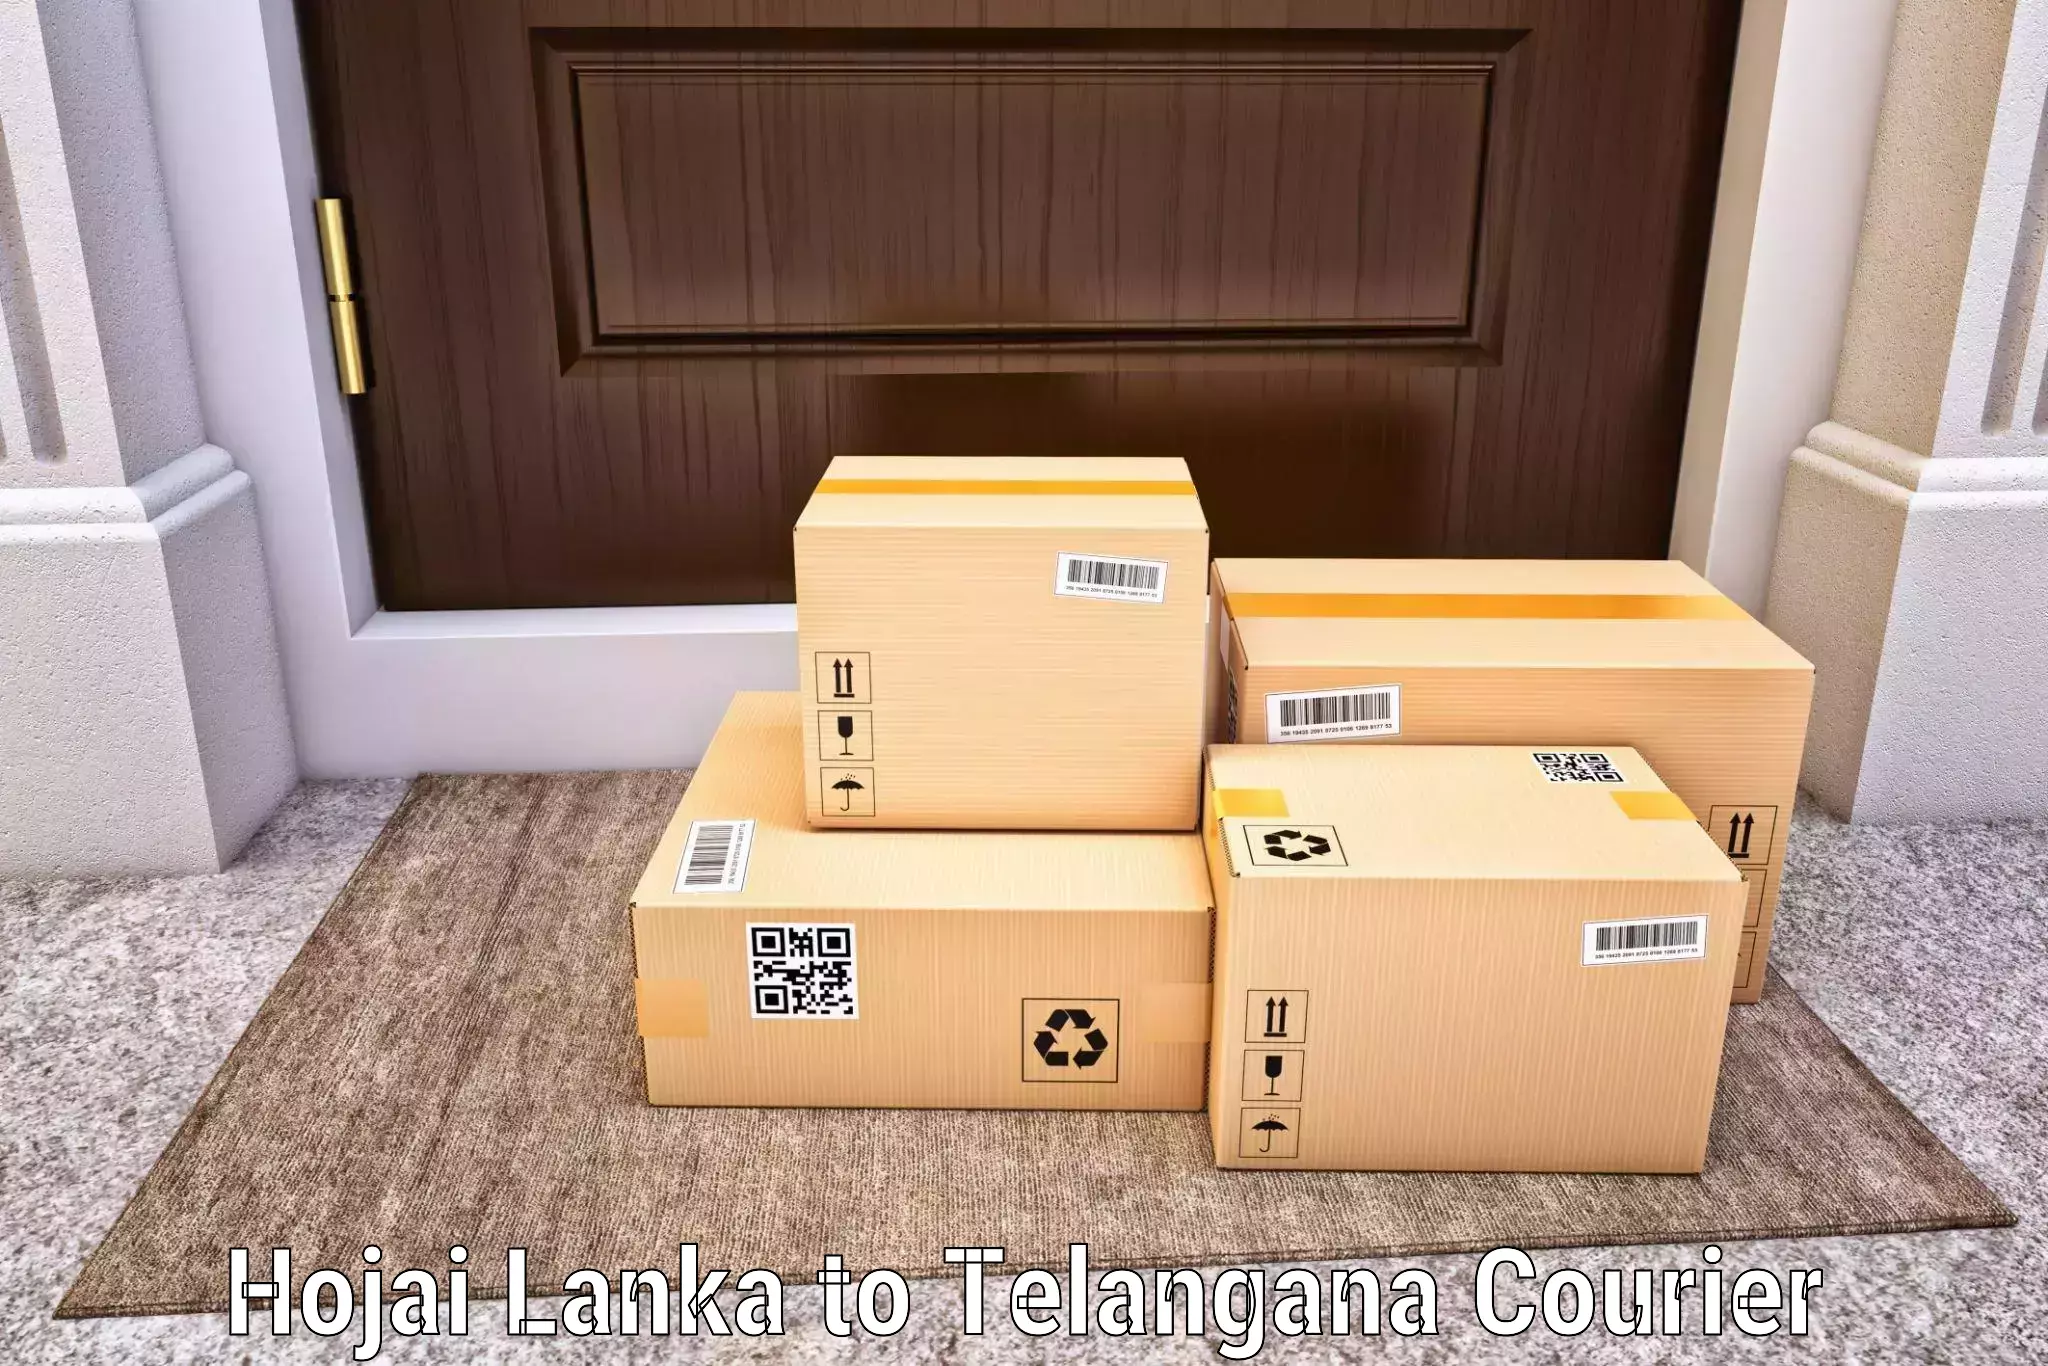 Express delivery solutions in Hojai Lanka to Dharmapuri Jagtial